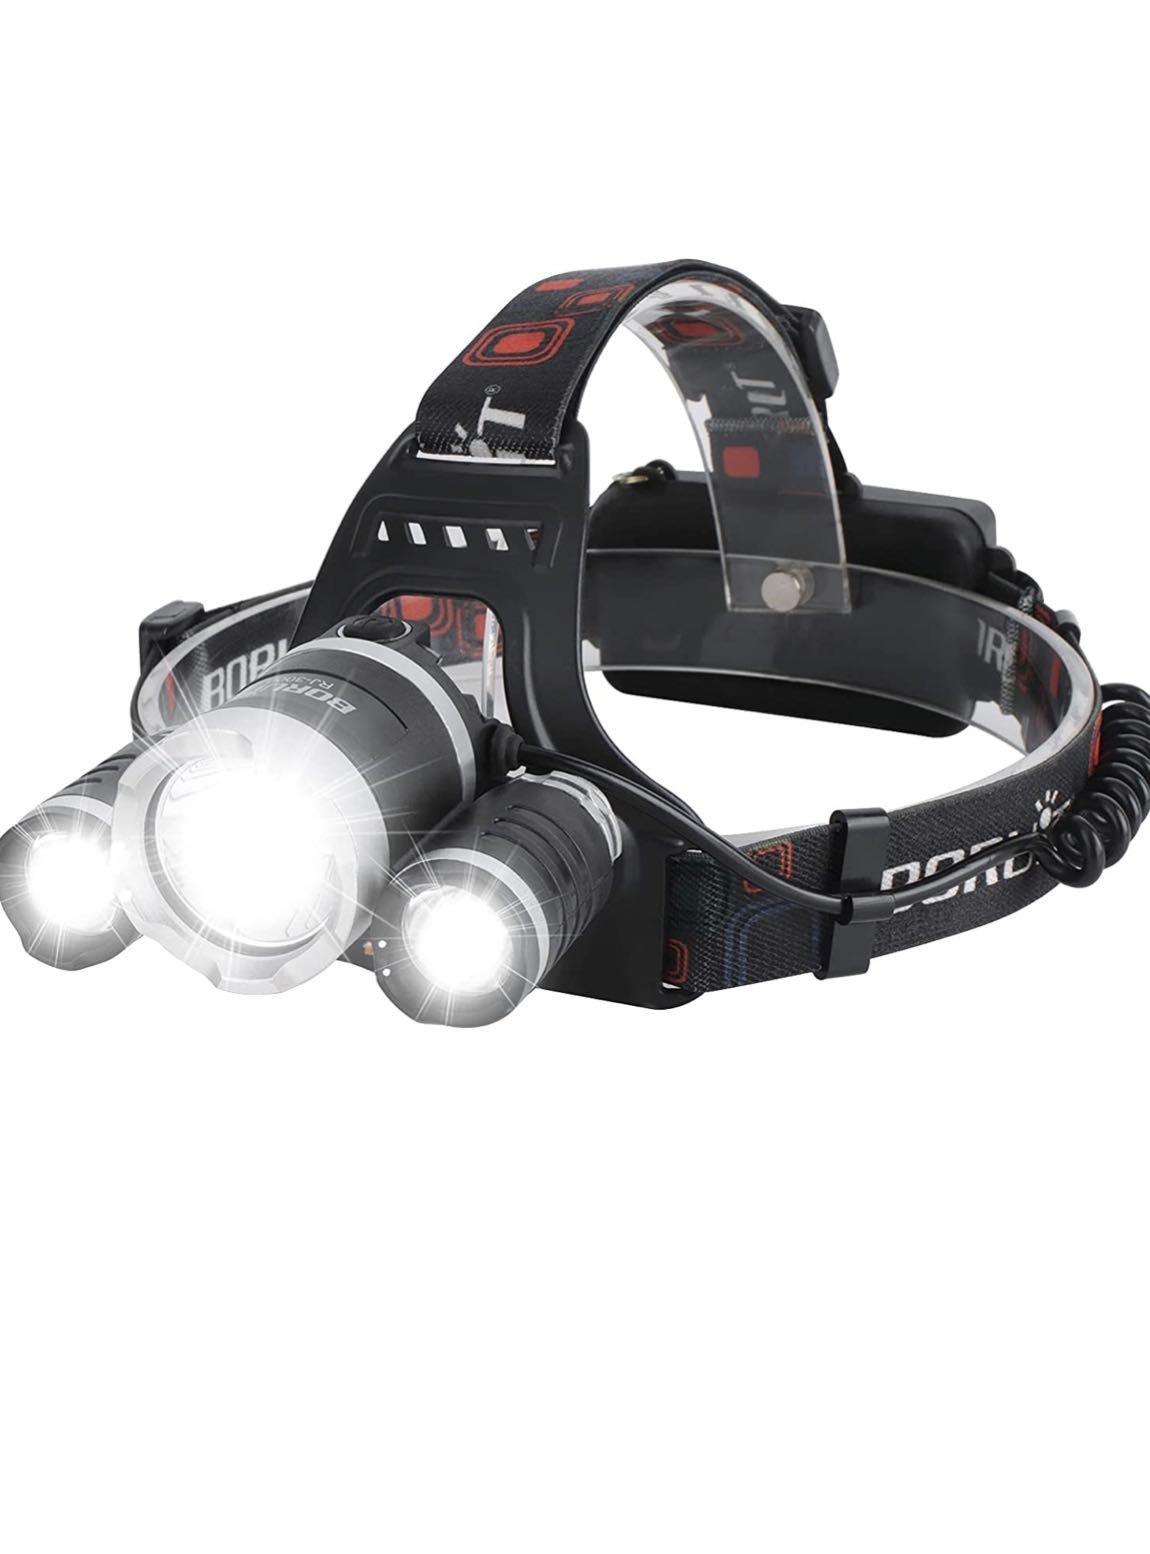 LED Headlamp 6000 Lumen with Rechargeable Headlamp, Bright Head  Lights,Waterproof Hard Hat Light,Fishing Head Lamp,Hunting headlamp,Running  or Camping